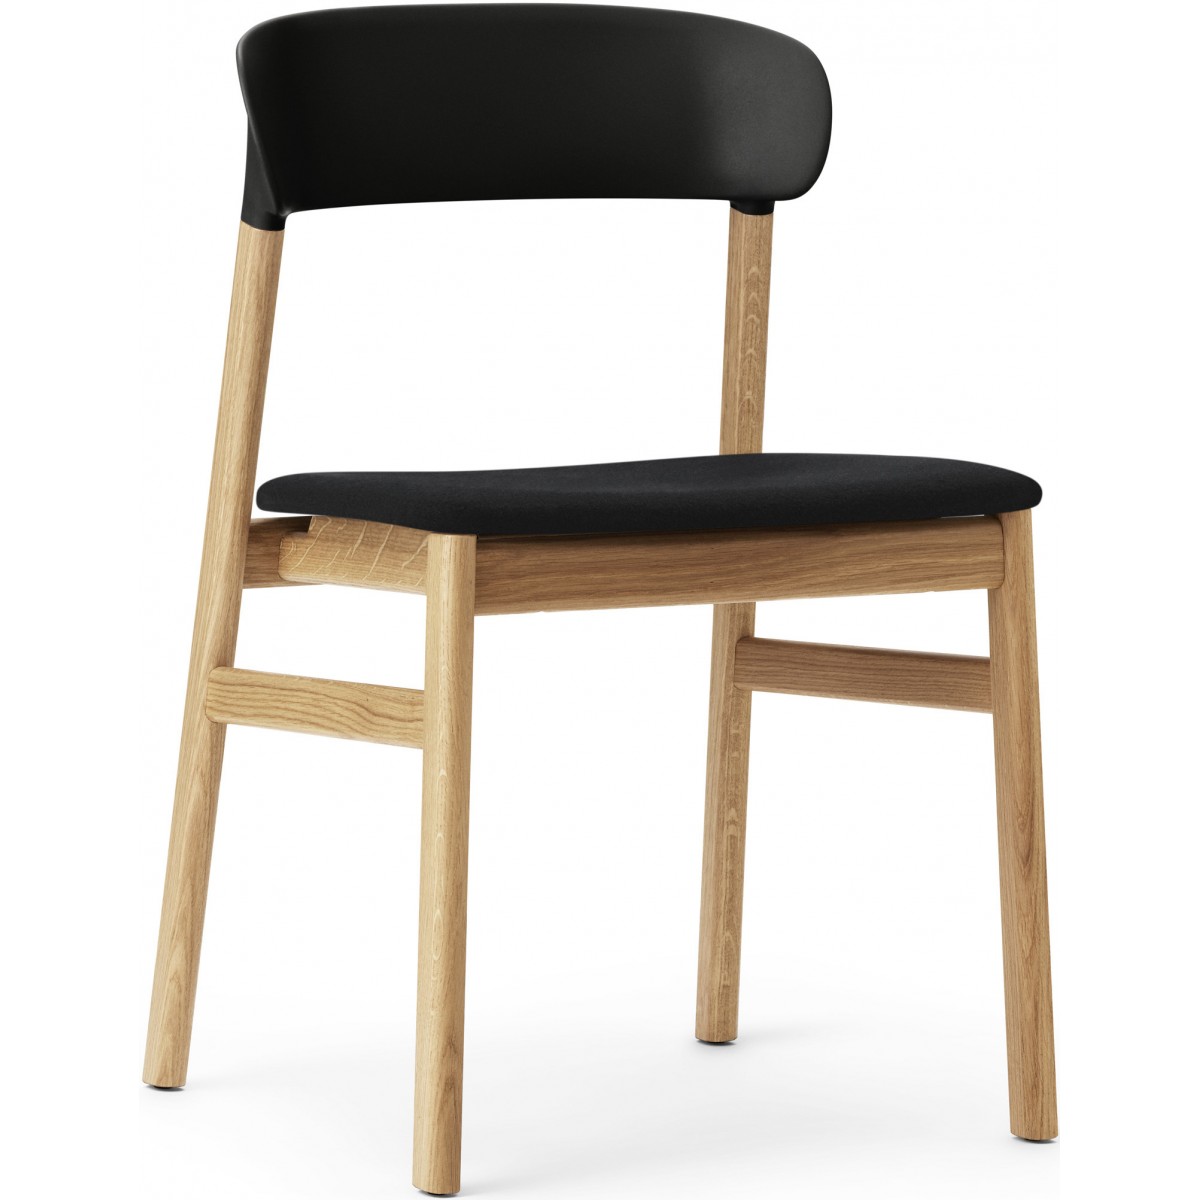 Synergy black / oak - Herit chair